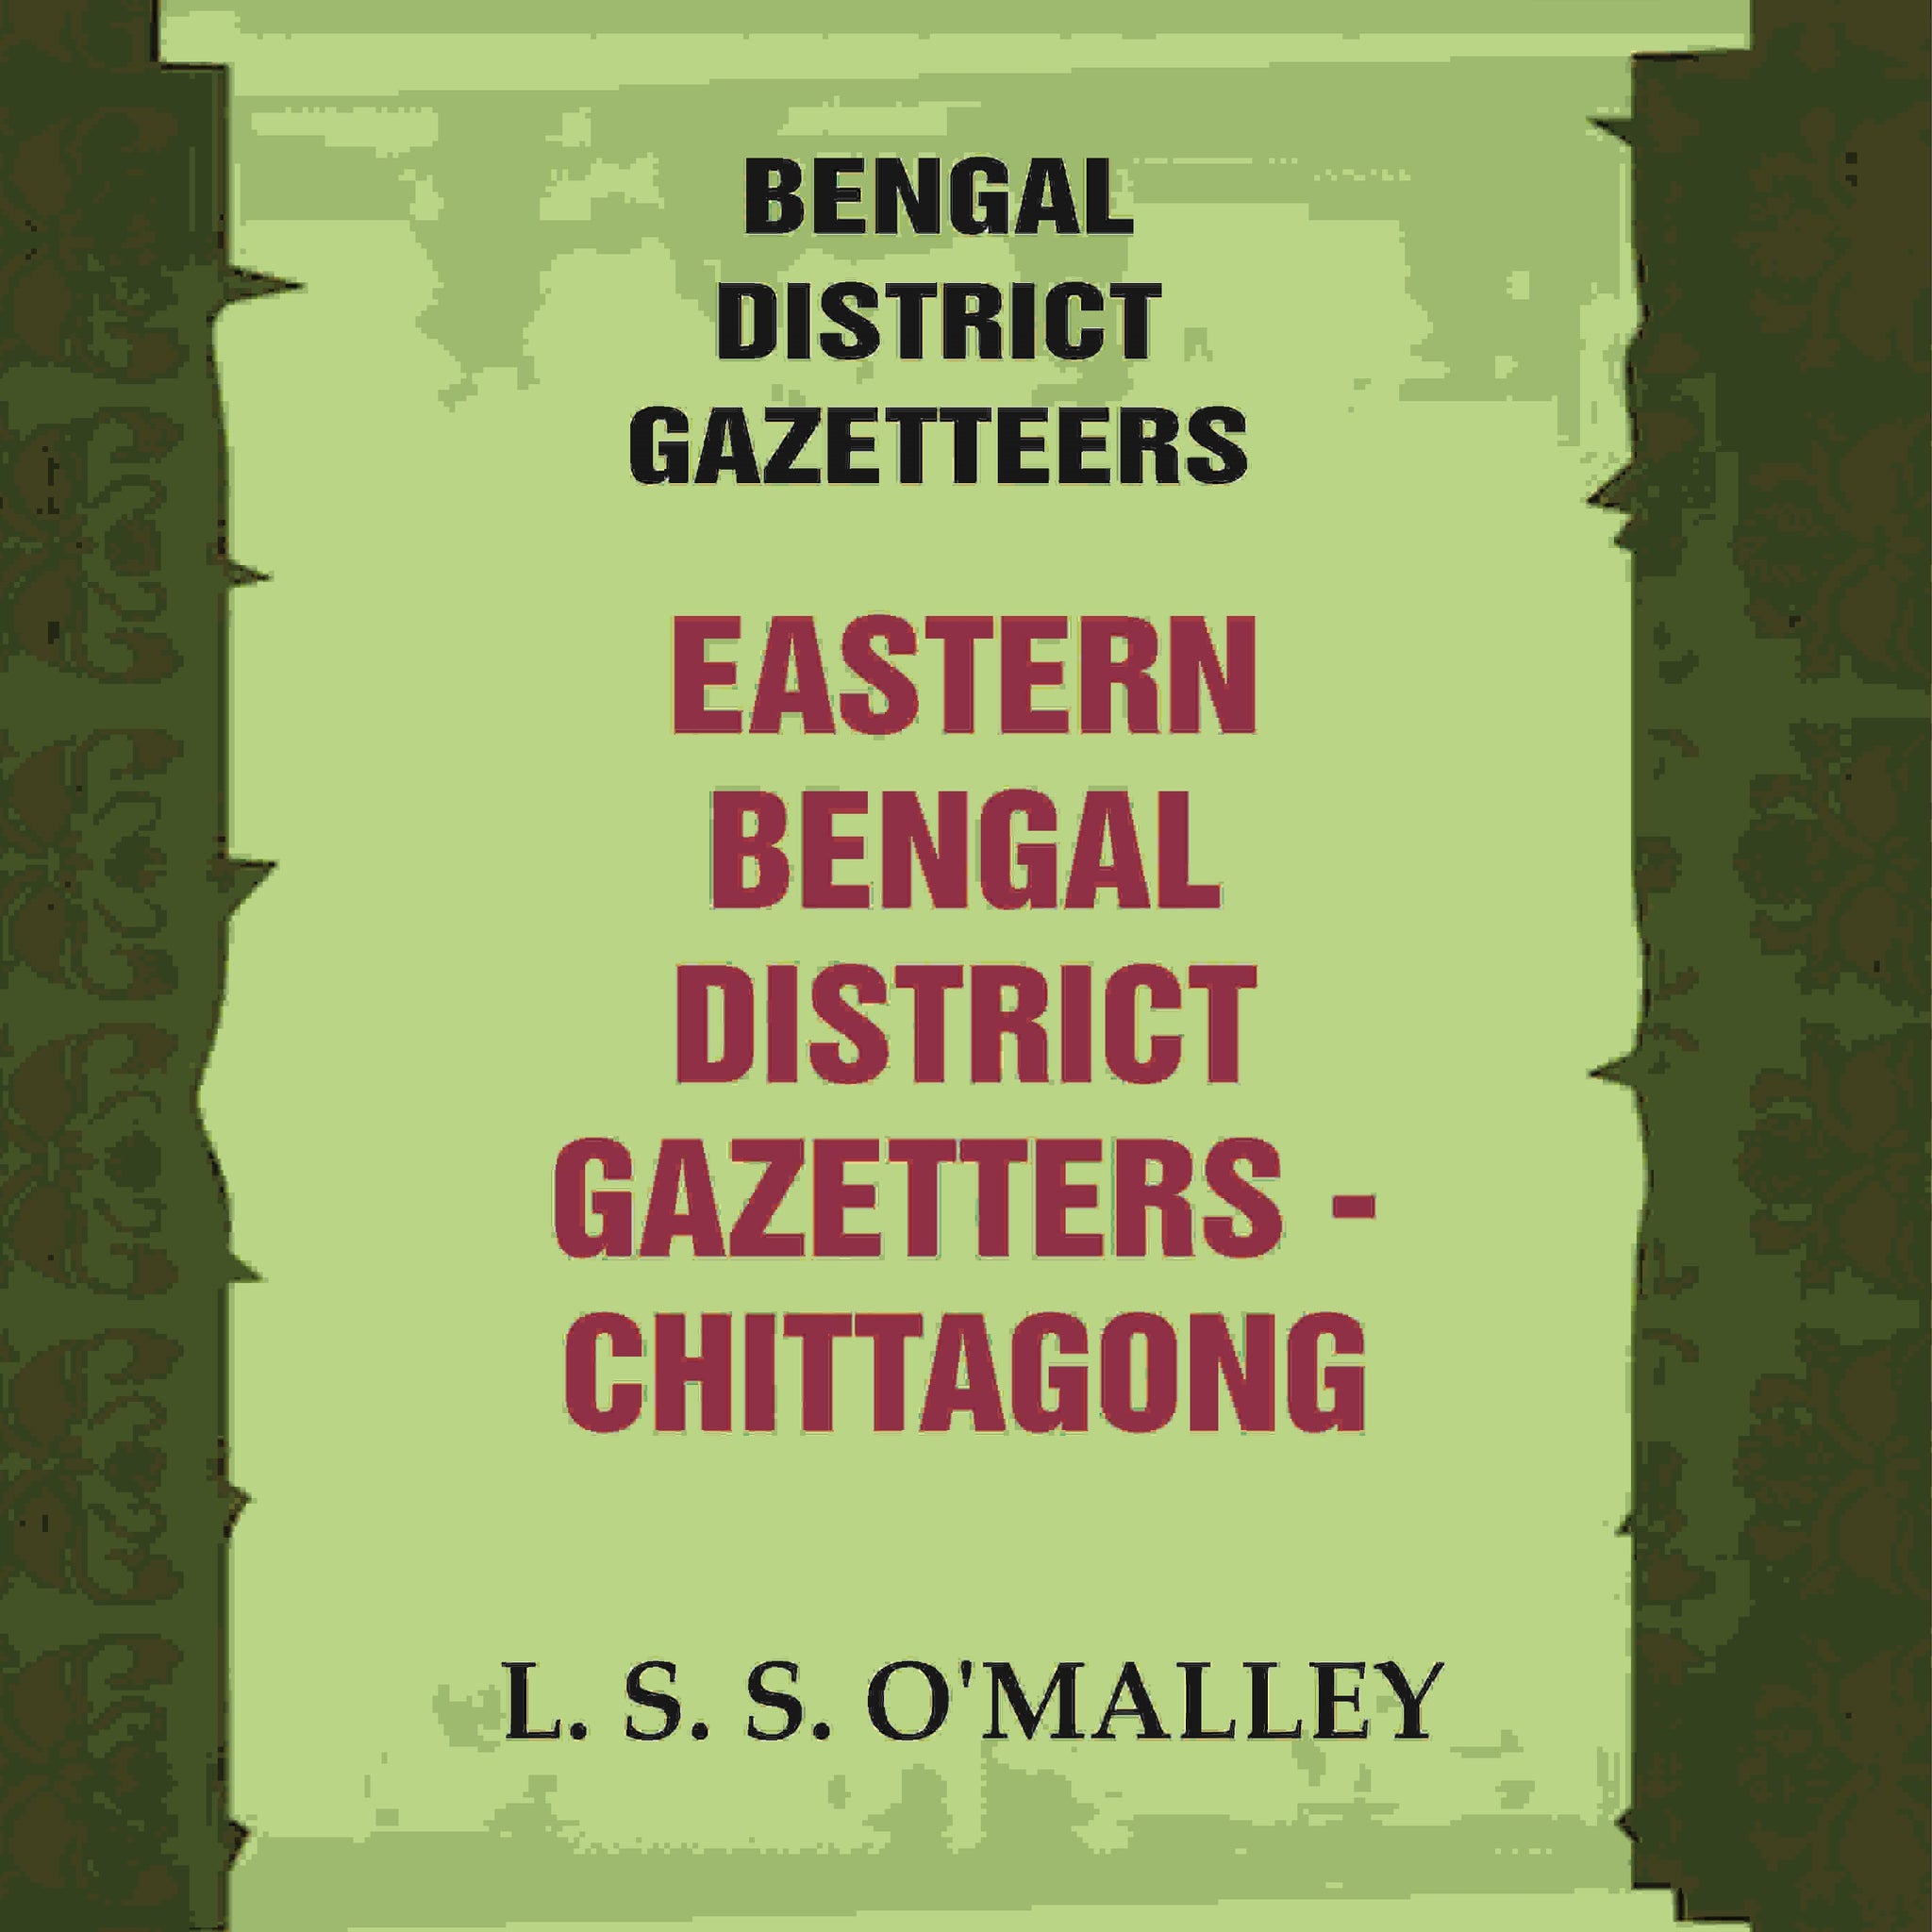 Bengal District Gazetteers: Eastern Bengal District Gazetters - Chittagong